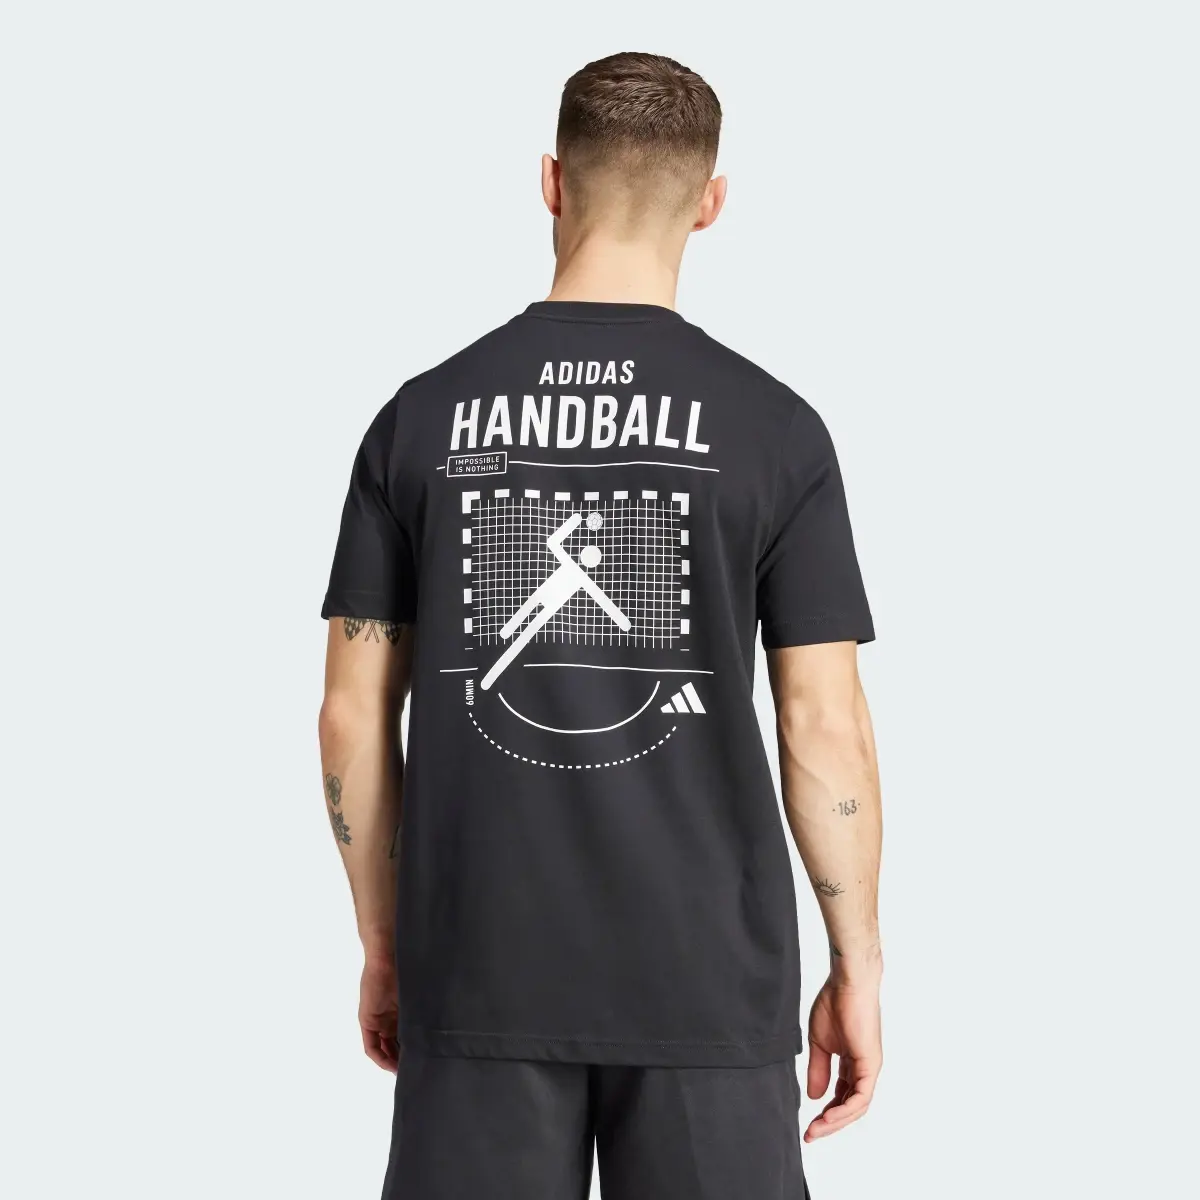 Adidas Handball Category Graphic T-Shirt. 3